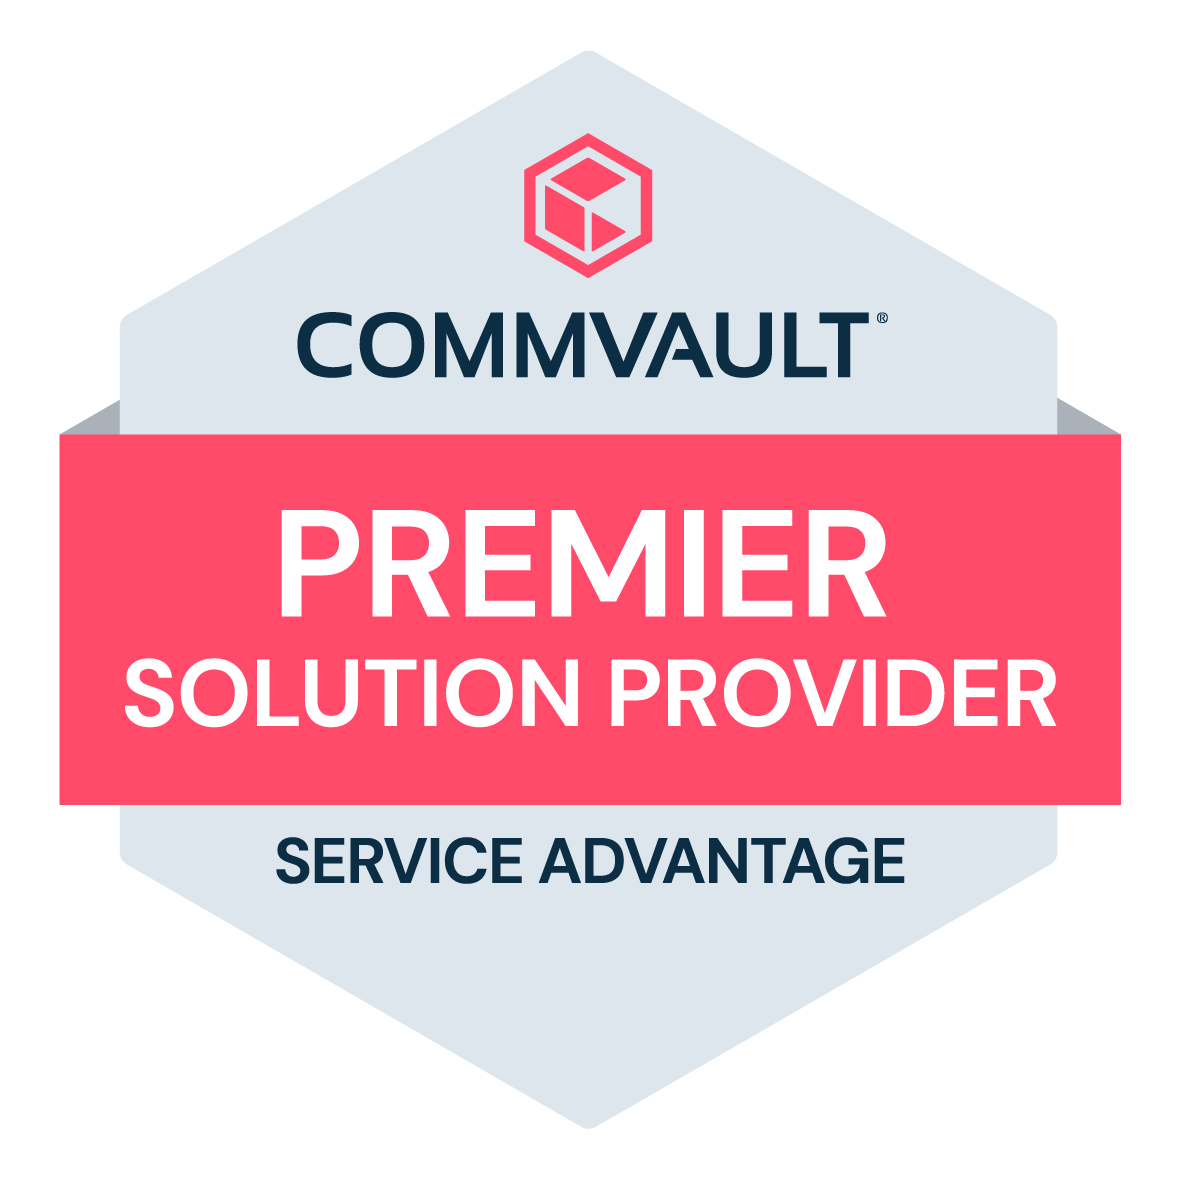 Commvault Premier Solution Provider with Service Advantage